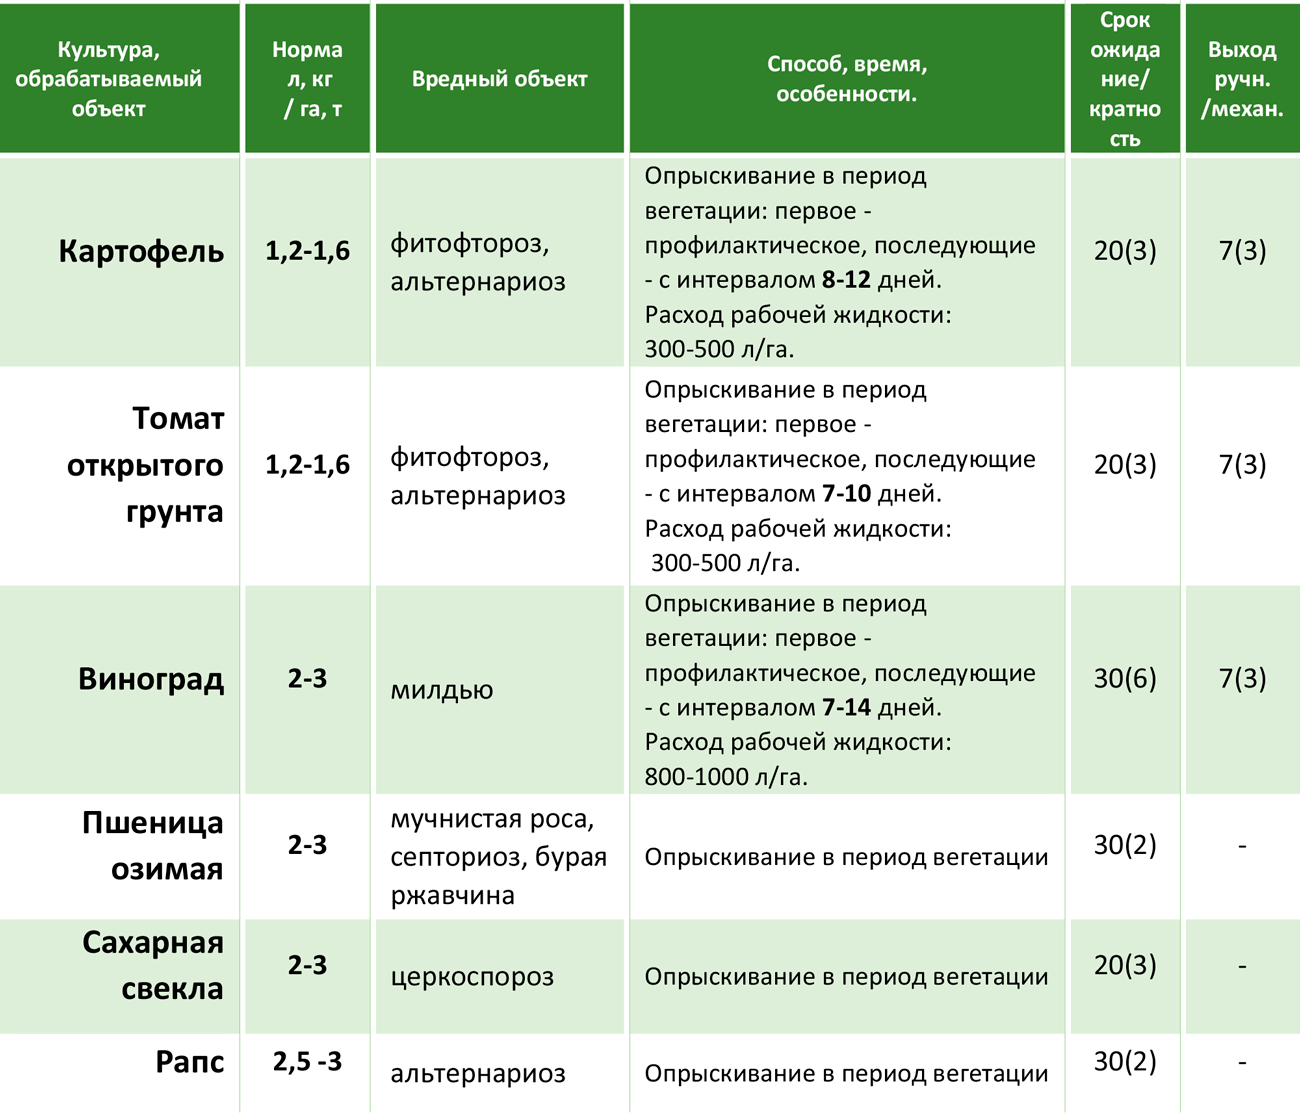 Карбендазим | справочник пестициды.ru